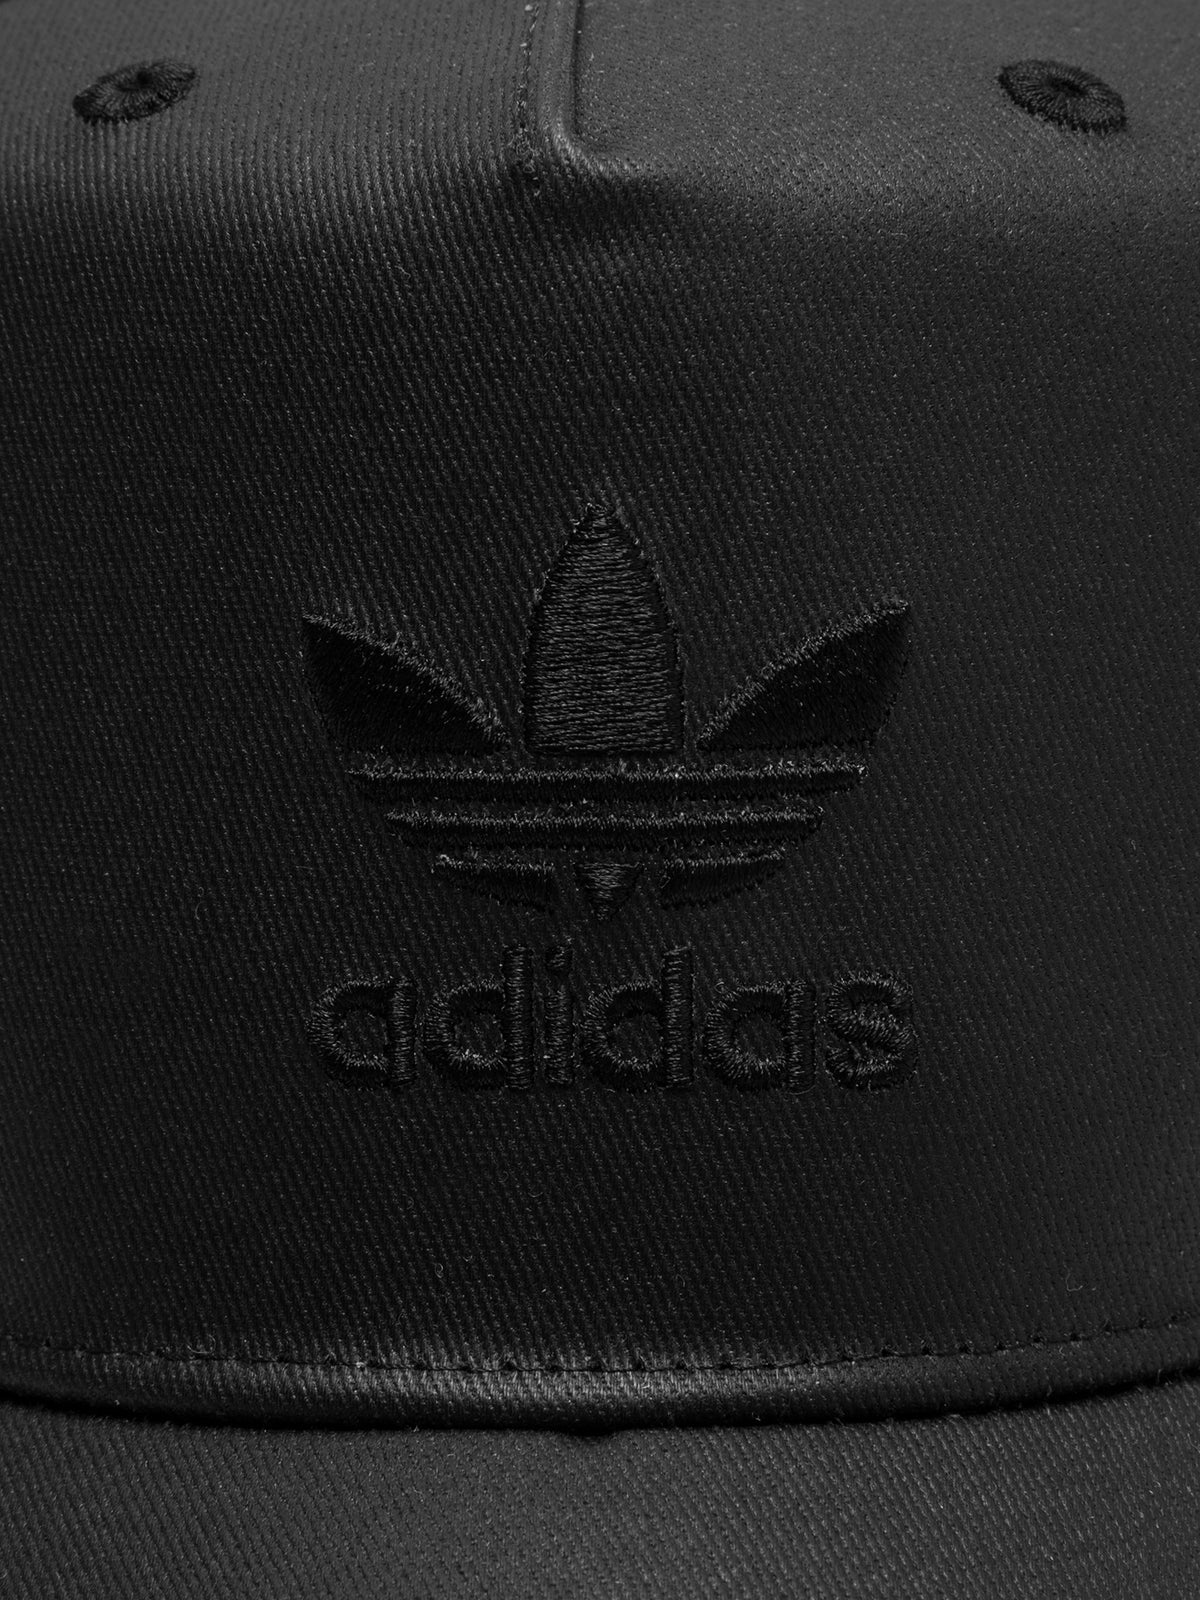 Adidas Trucker Cap in Black